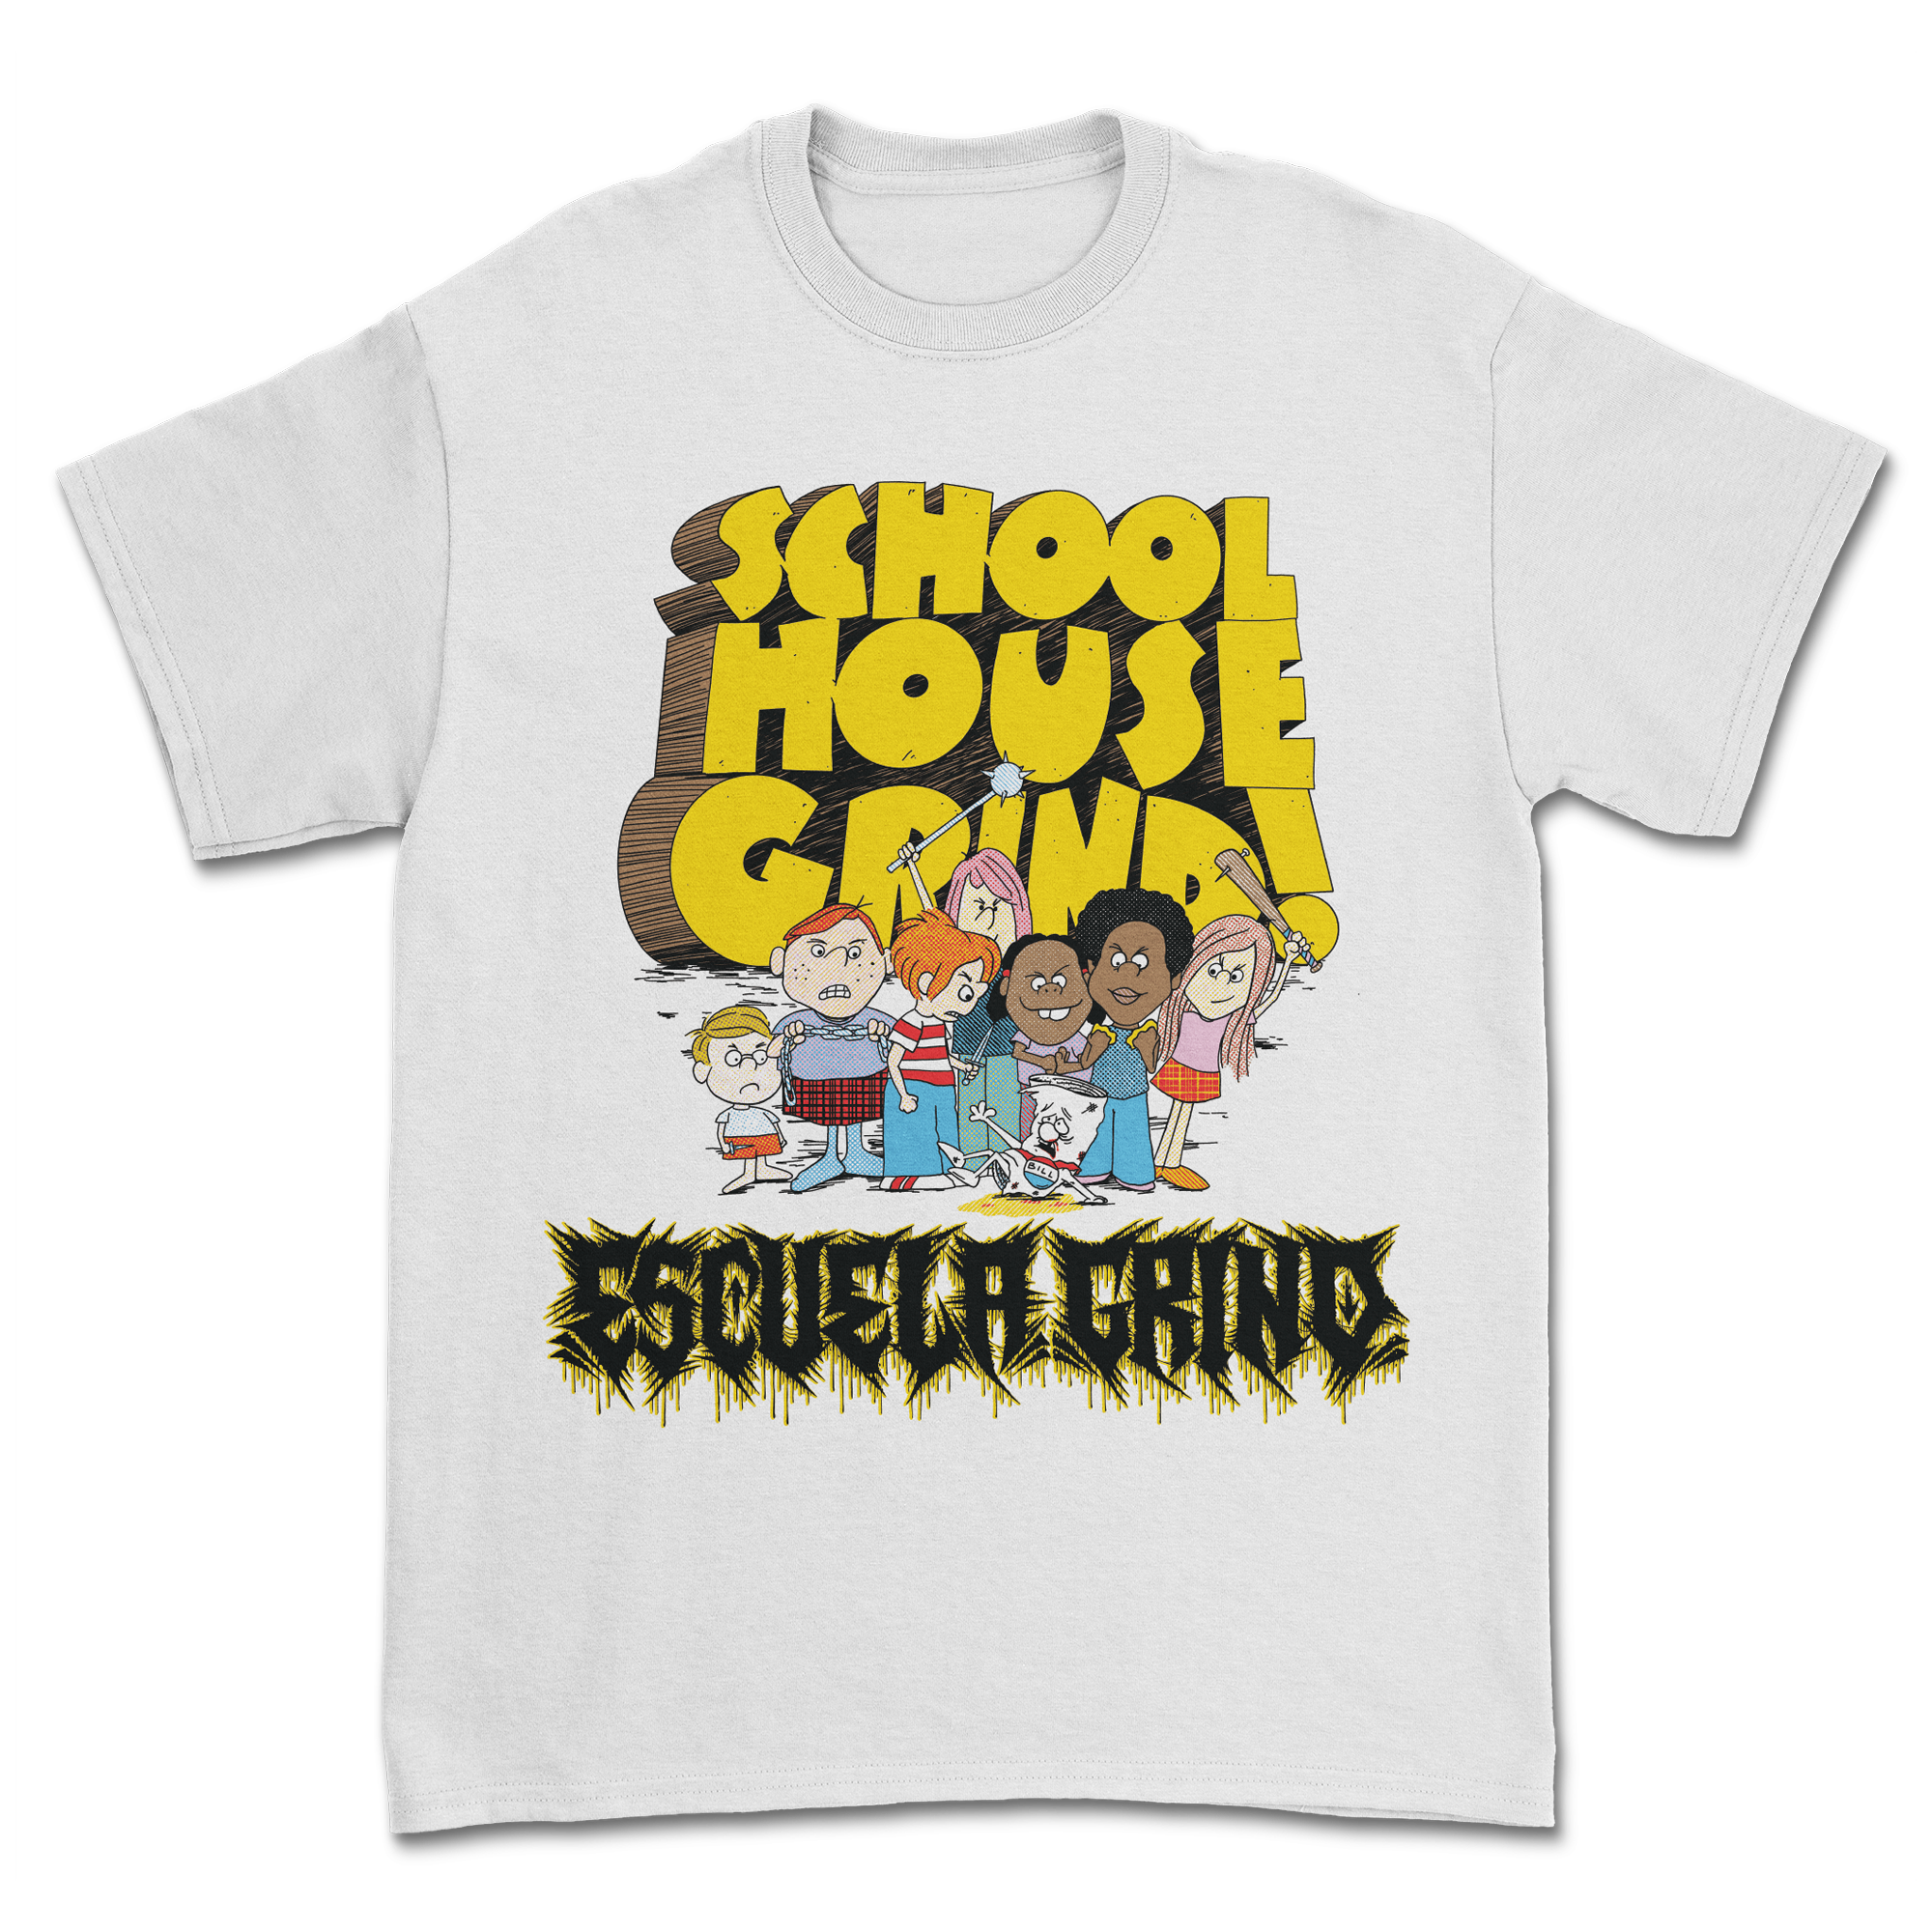 Escuela Grind - Schoolhouse Charity T-Shirt (Pre-Order)